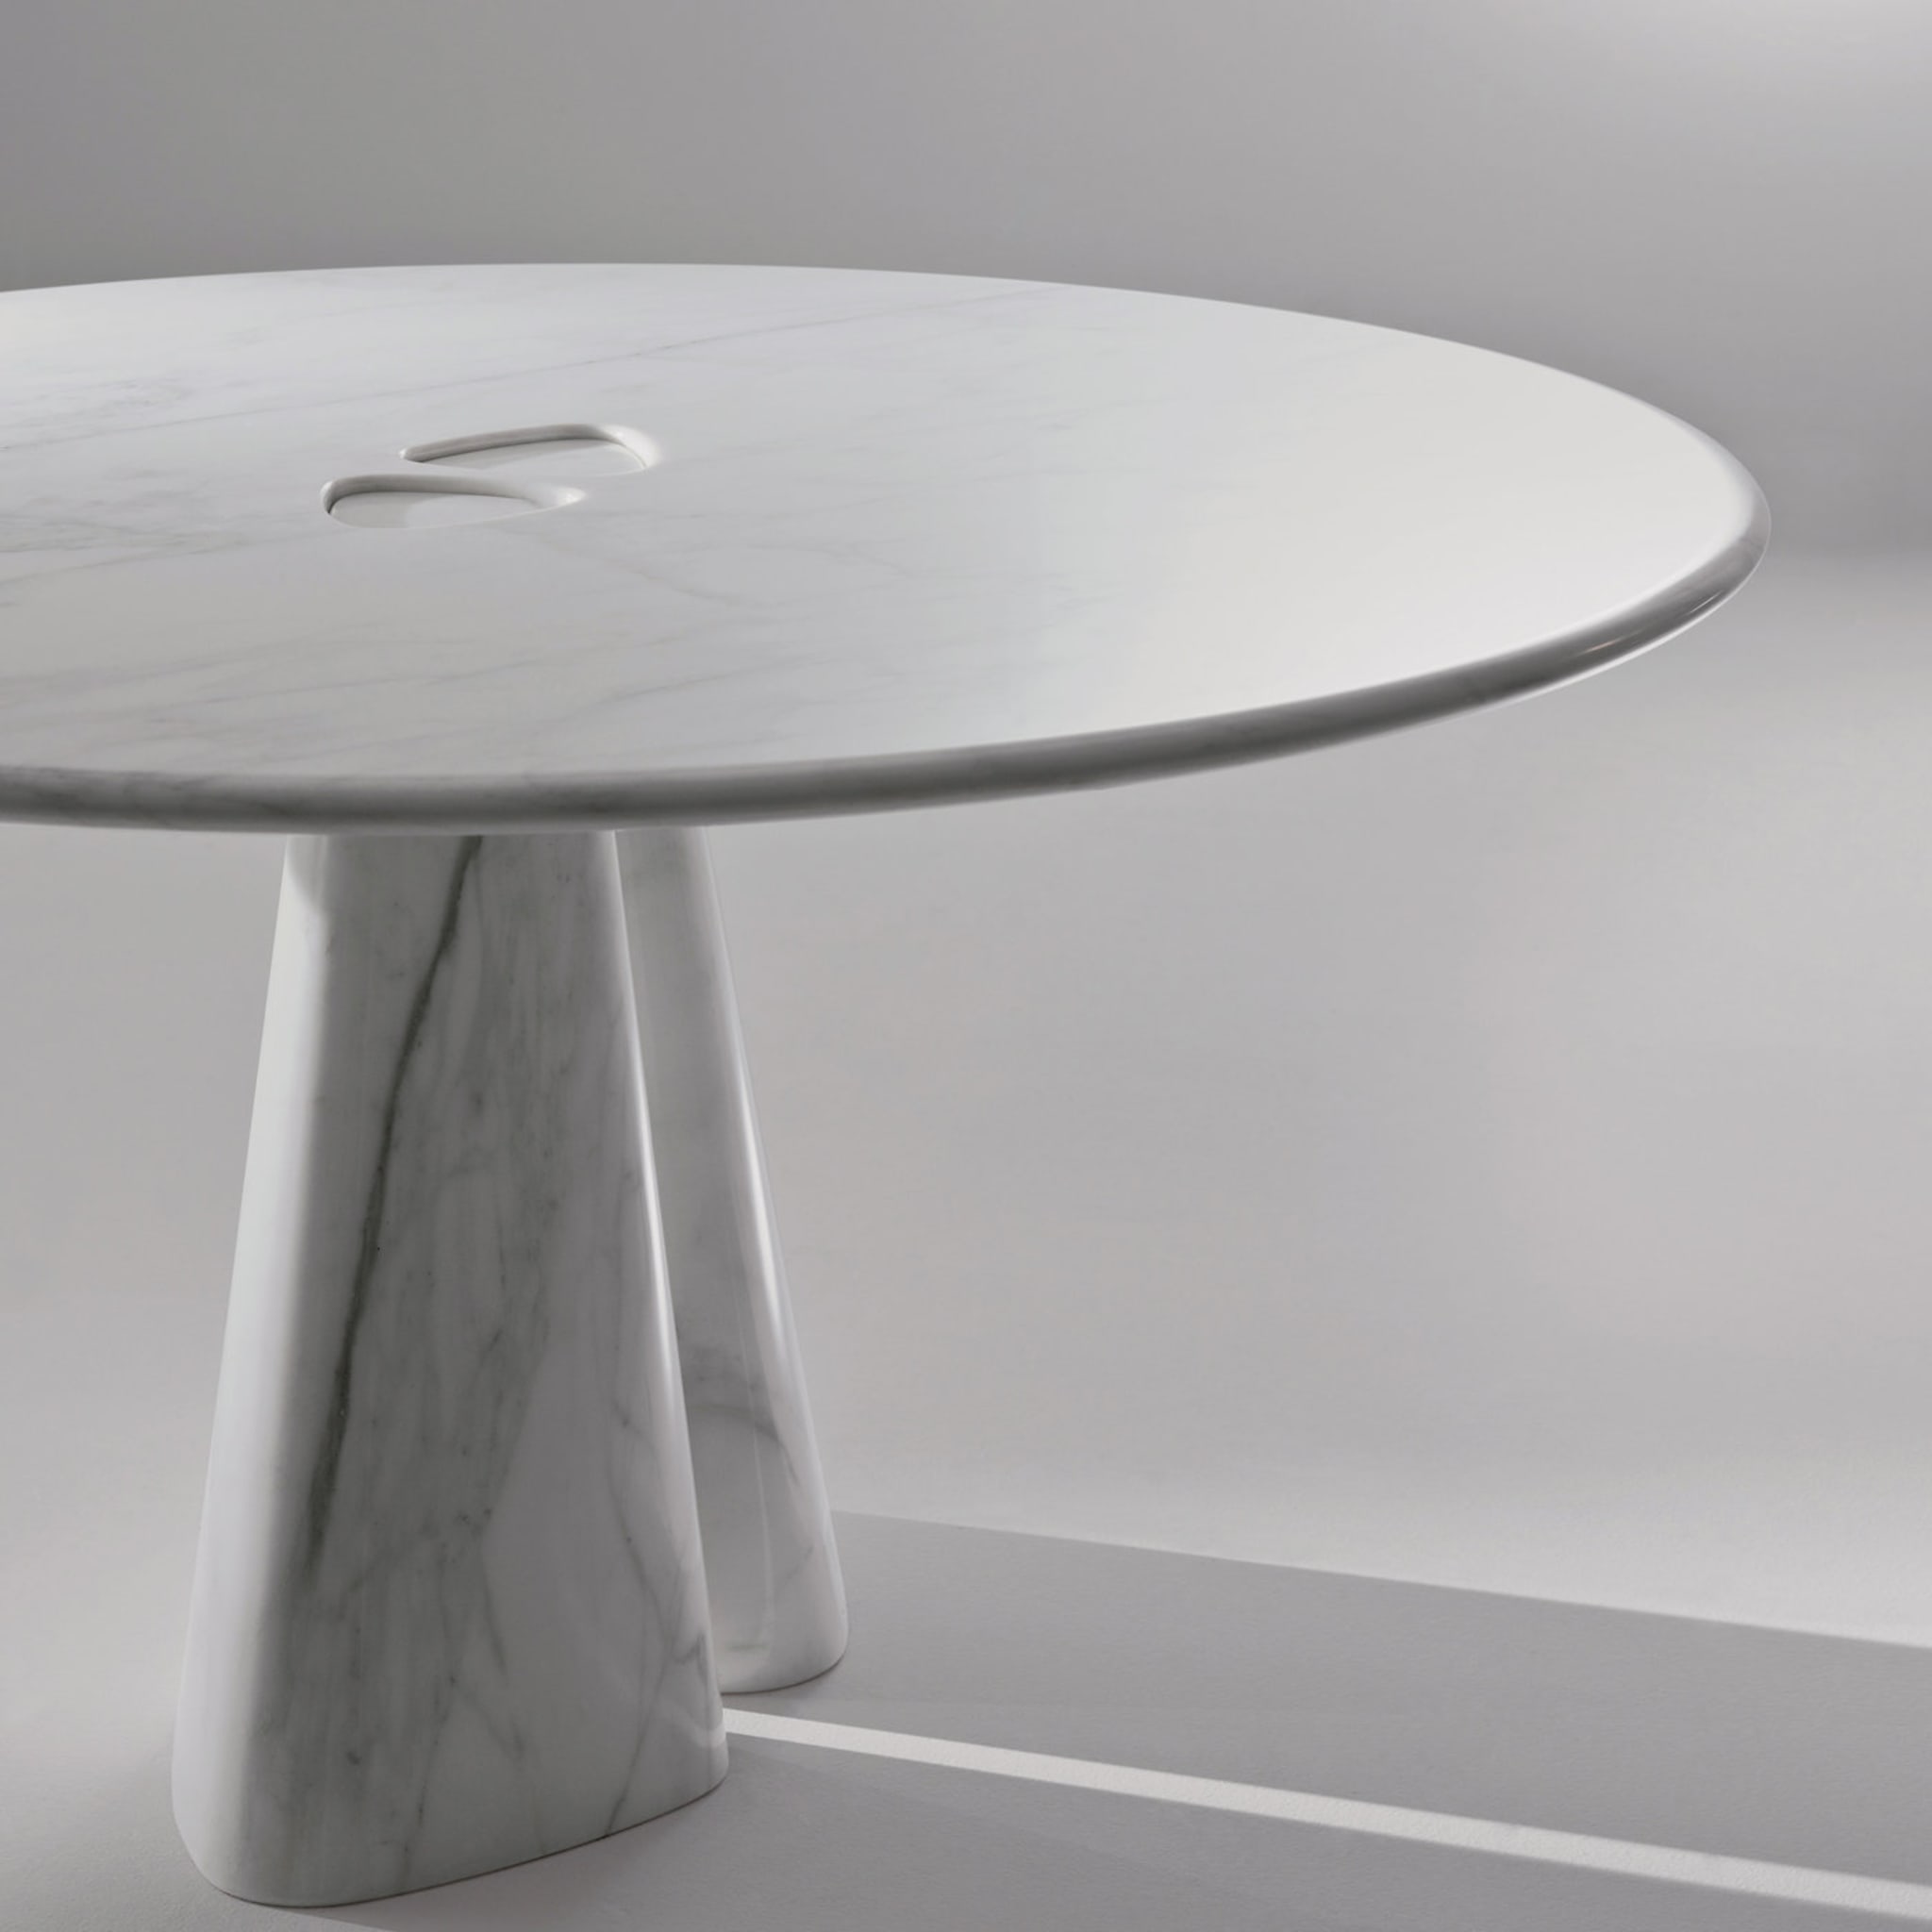 Raja Round Table by Bartoli Design - Alternative view 2